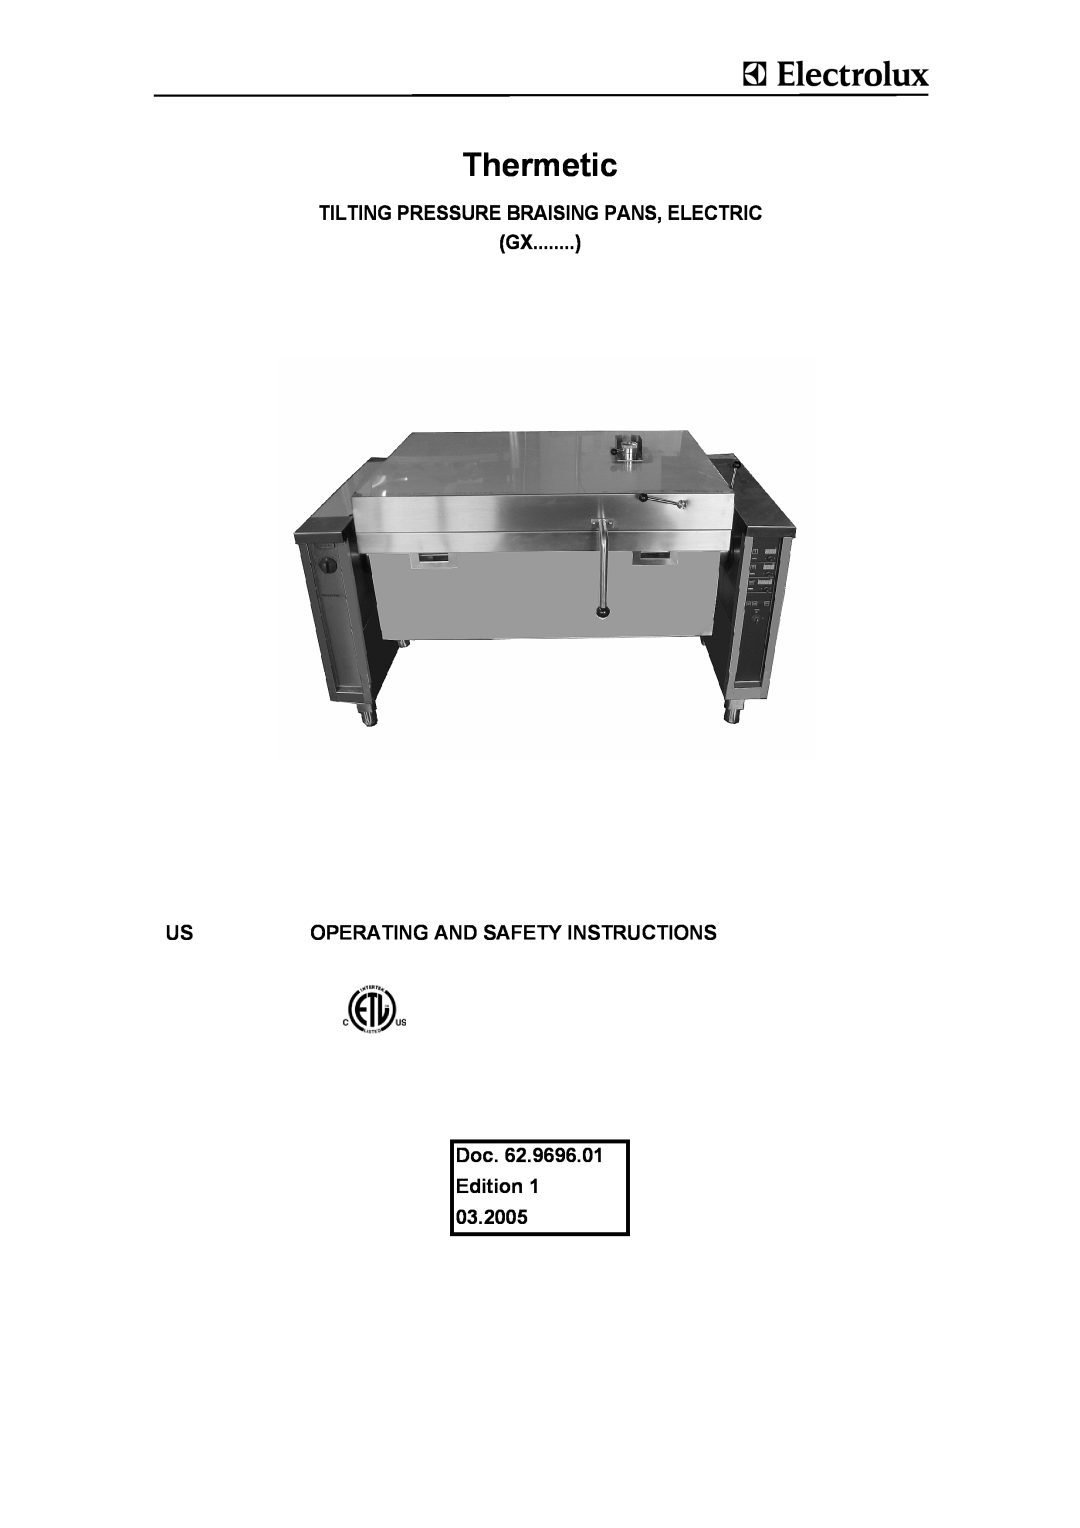 Electrolux GXXBOEOOOO, GXYEOEOOOO manual Tilting Pressure Braising Pans, Electric Gx, Doc. 62.9696.01 Edition 1, Thermetic 